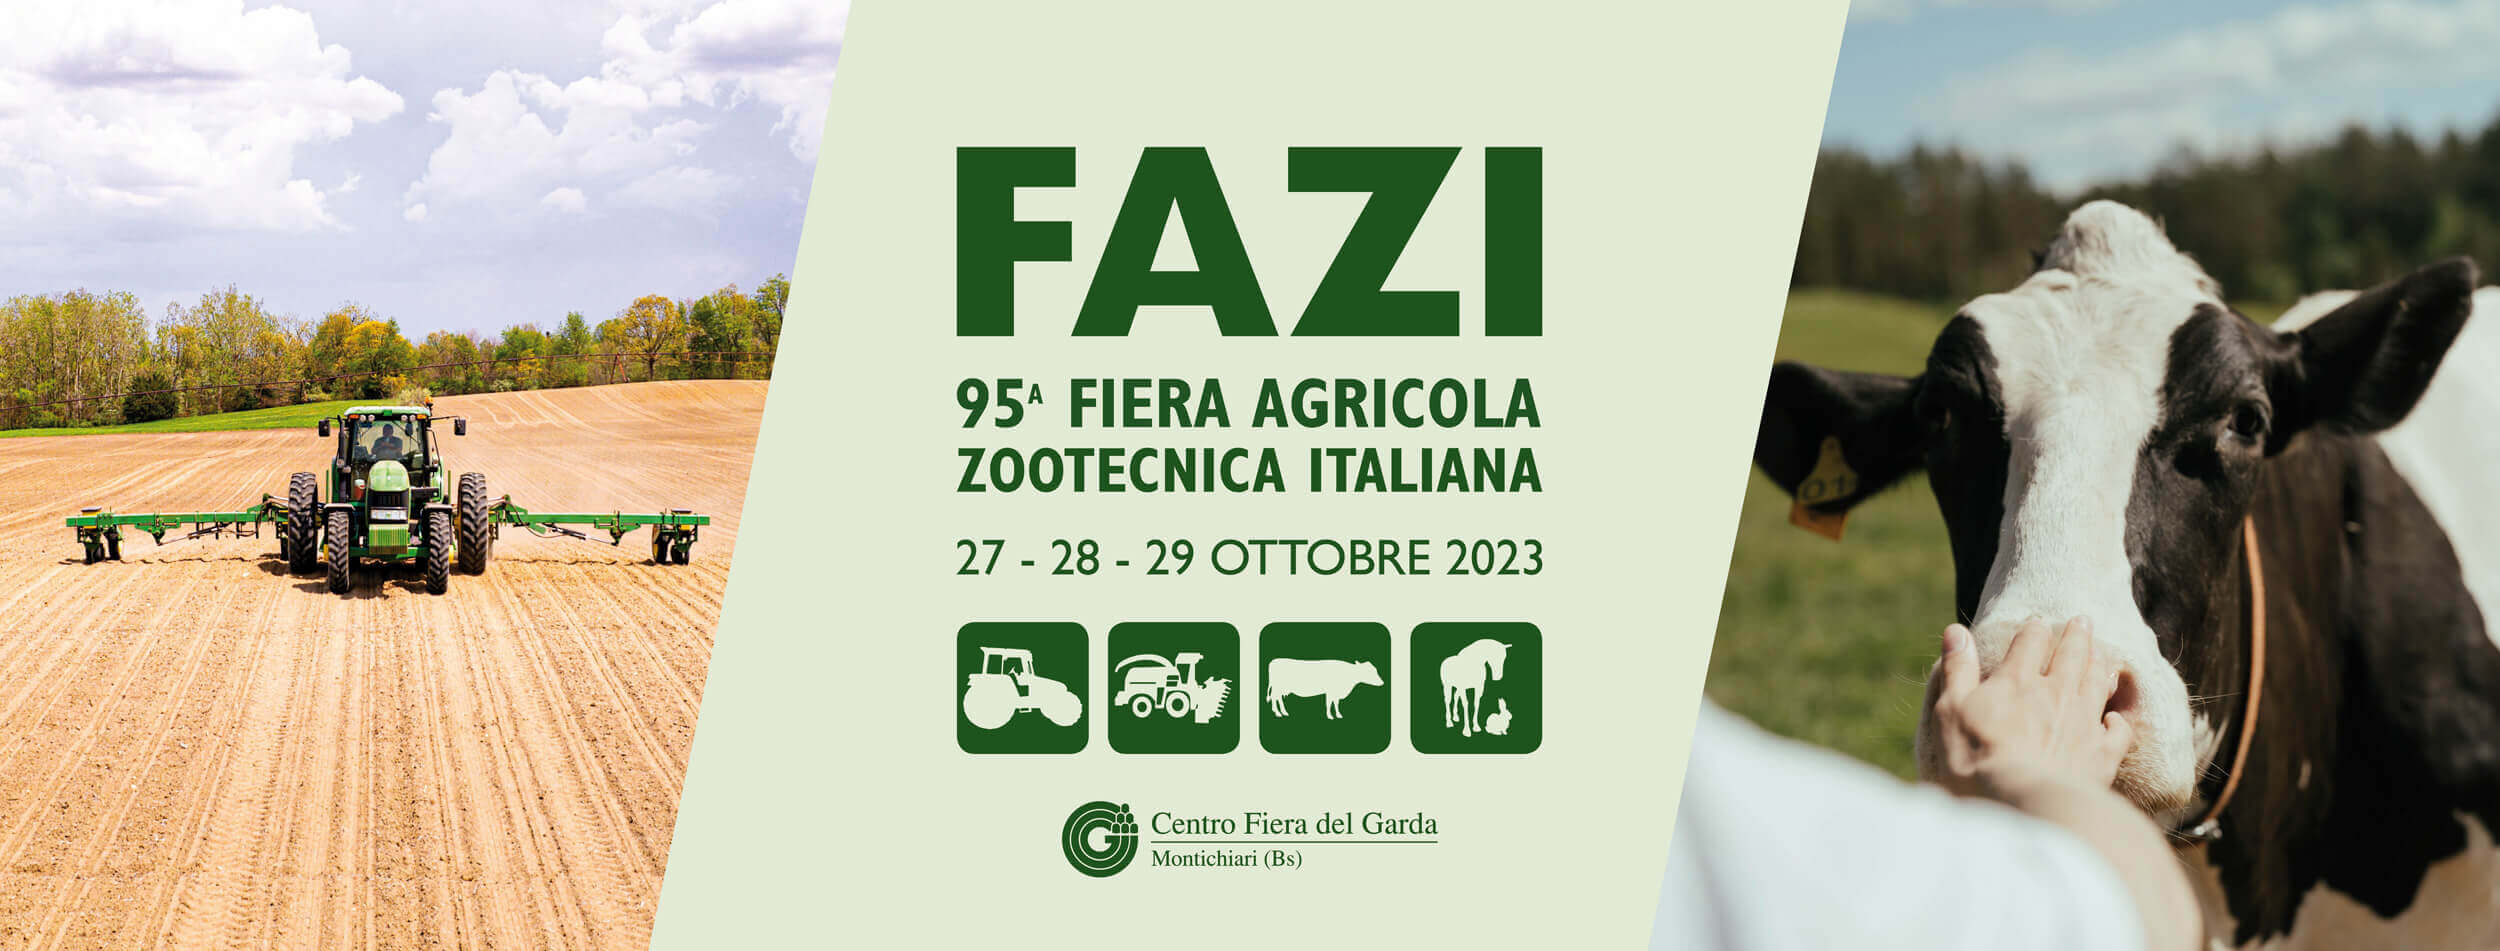 FAZI 95ª Fiera agricola zootecnica italiana - 27/28/29 Ottobre 2023